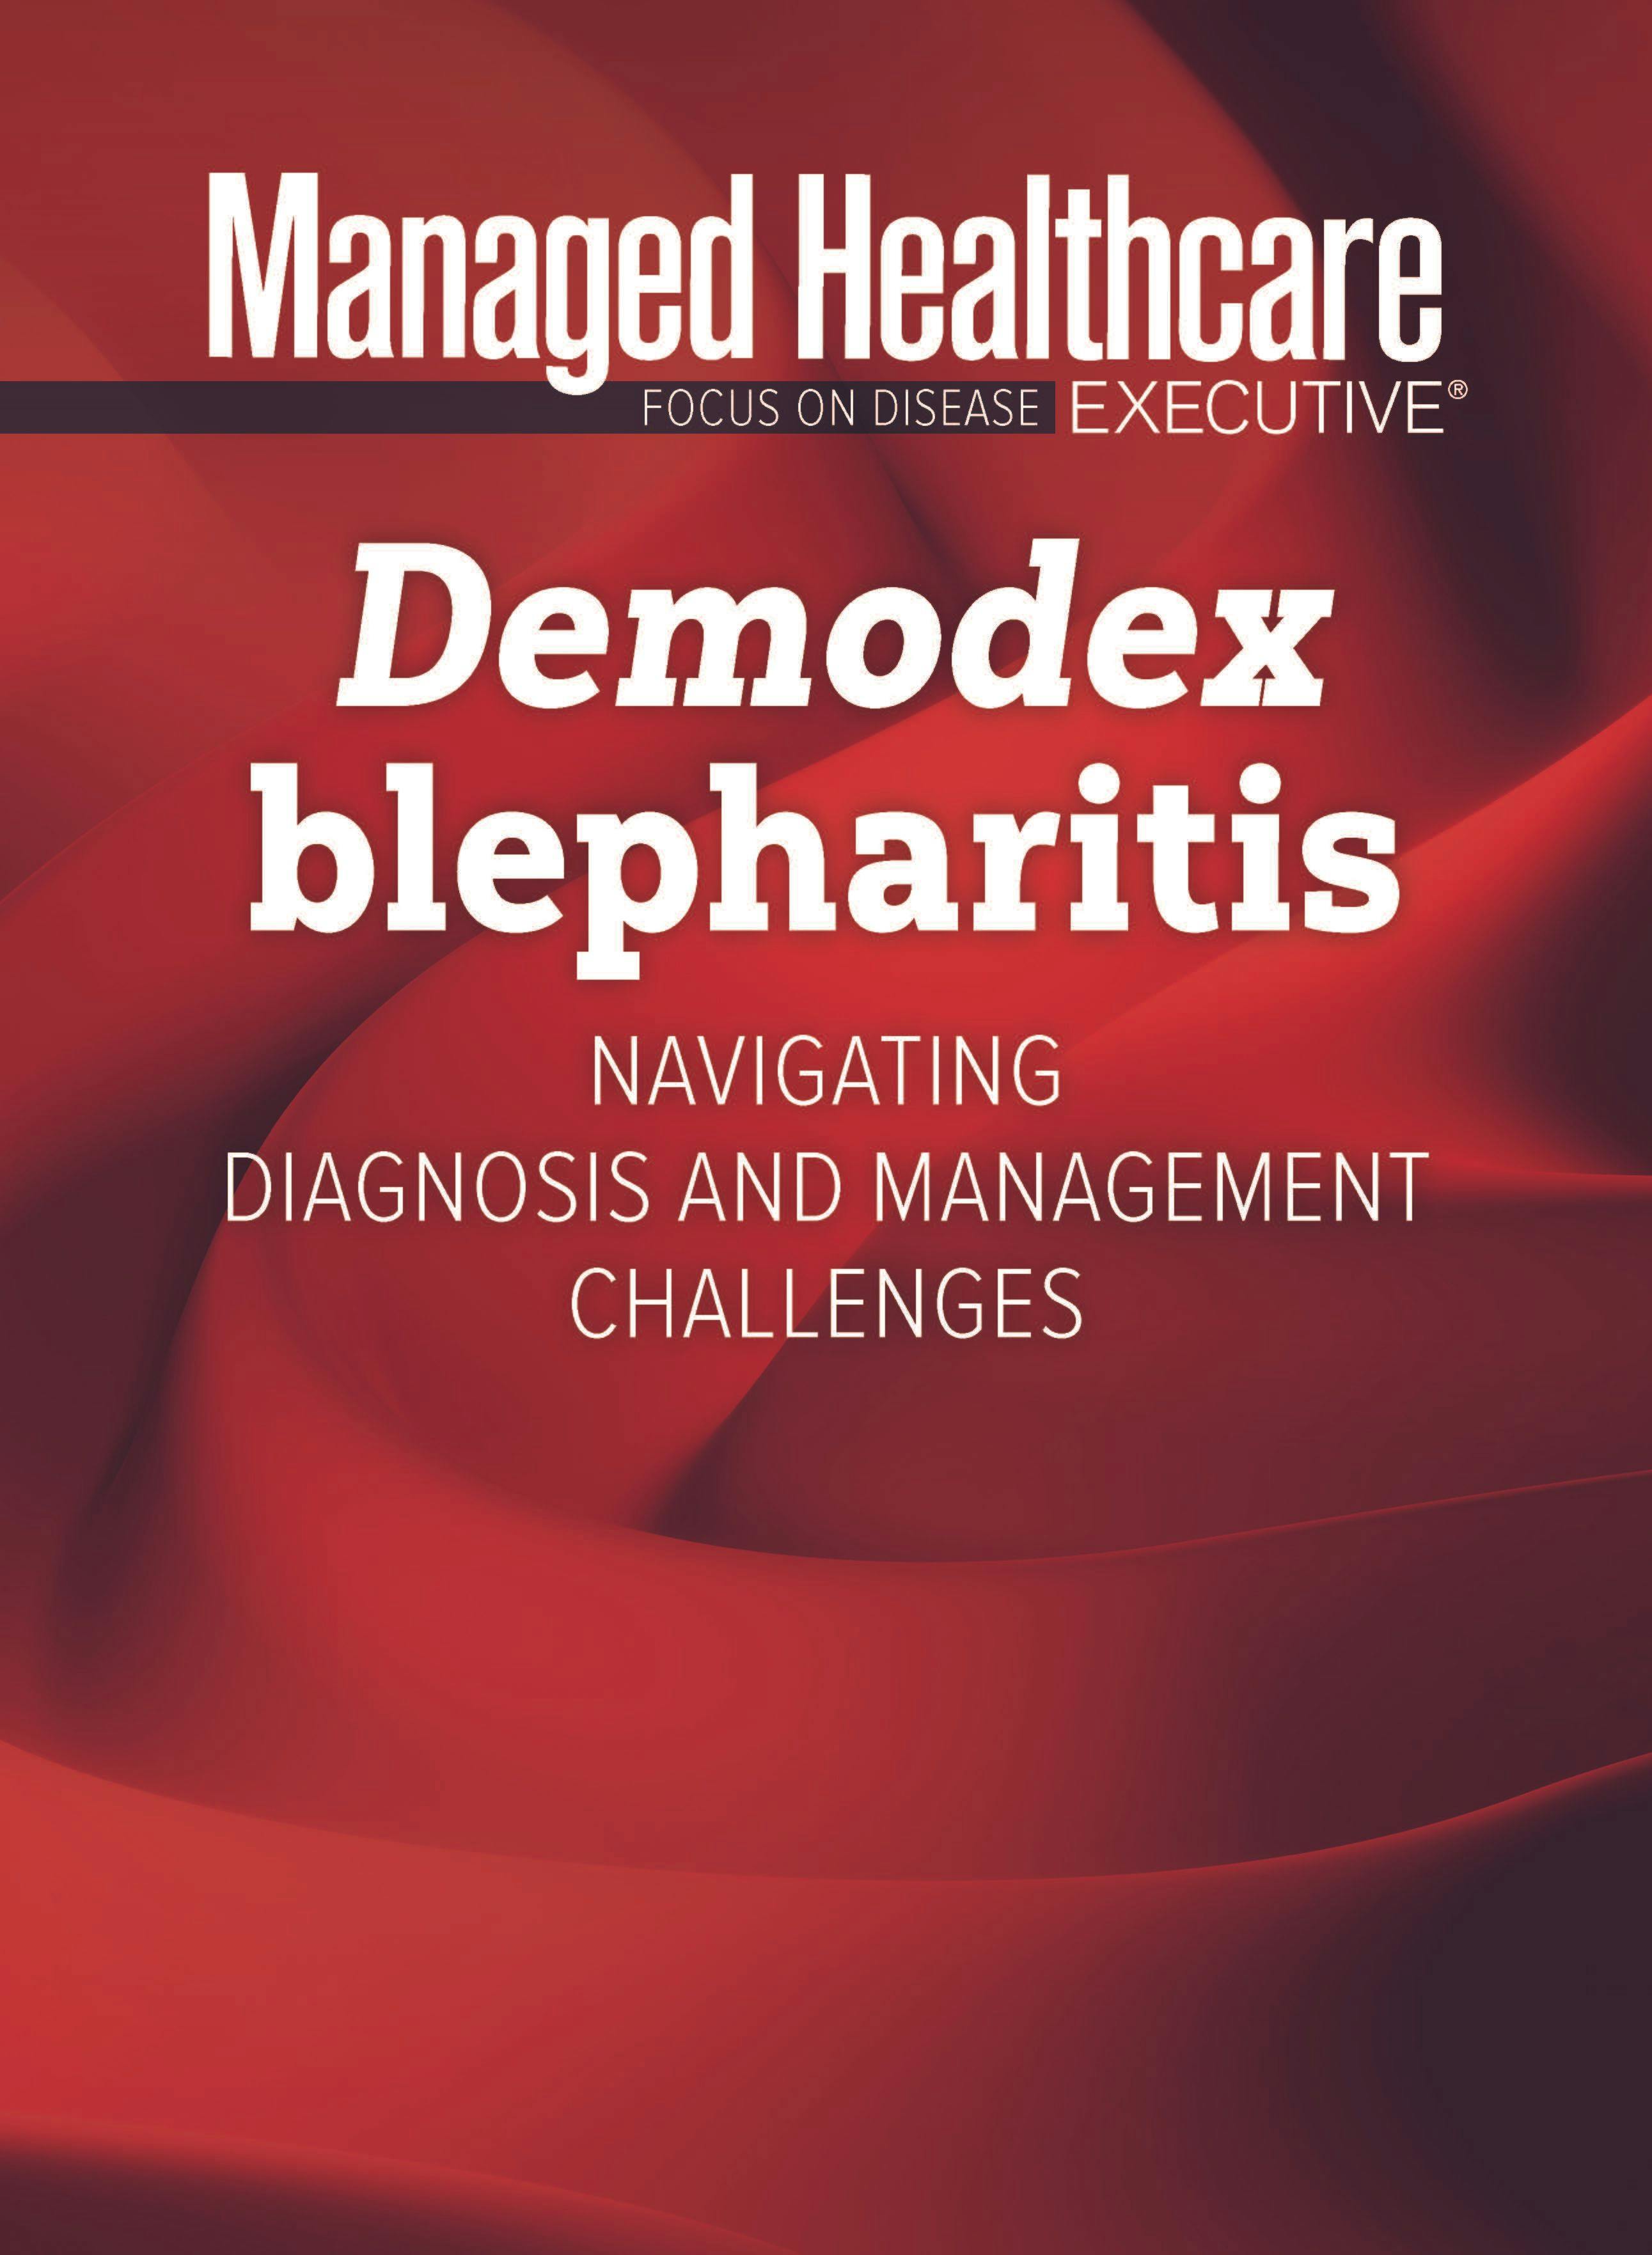 Demodex blepharitis: Navigating Diagnosis and Management Challenges